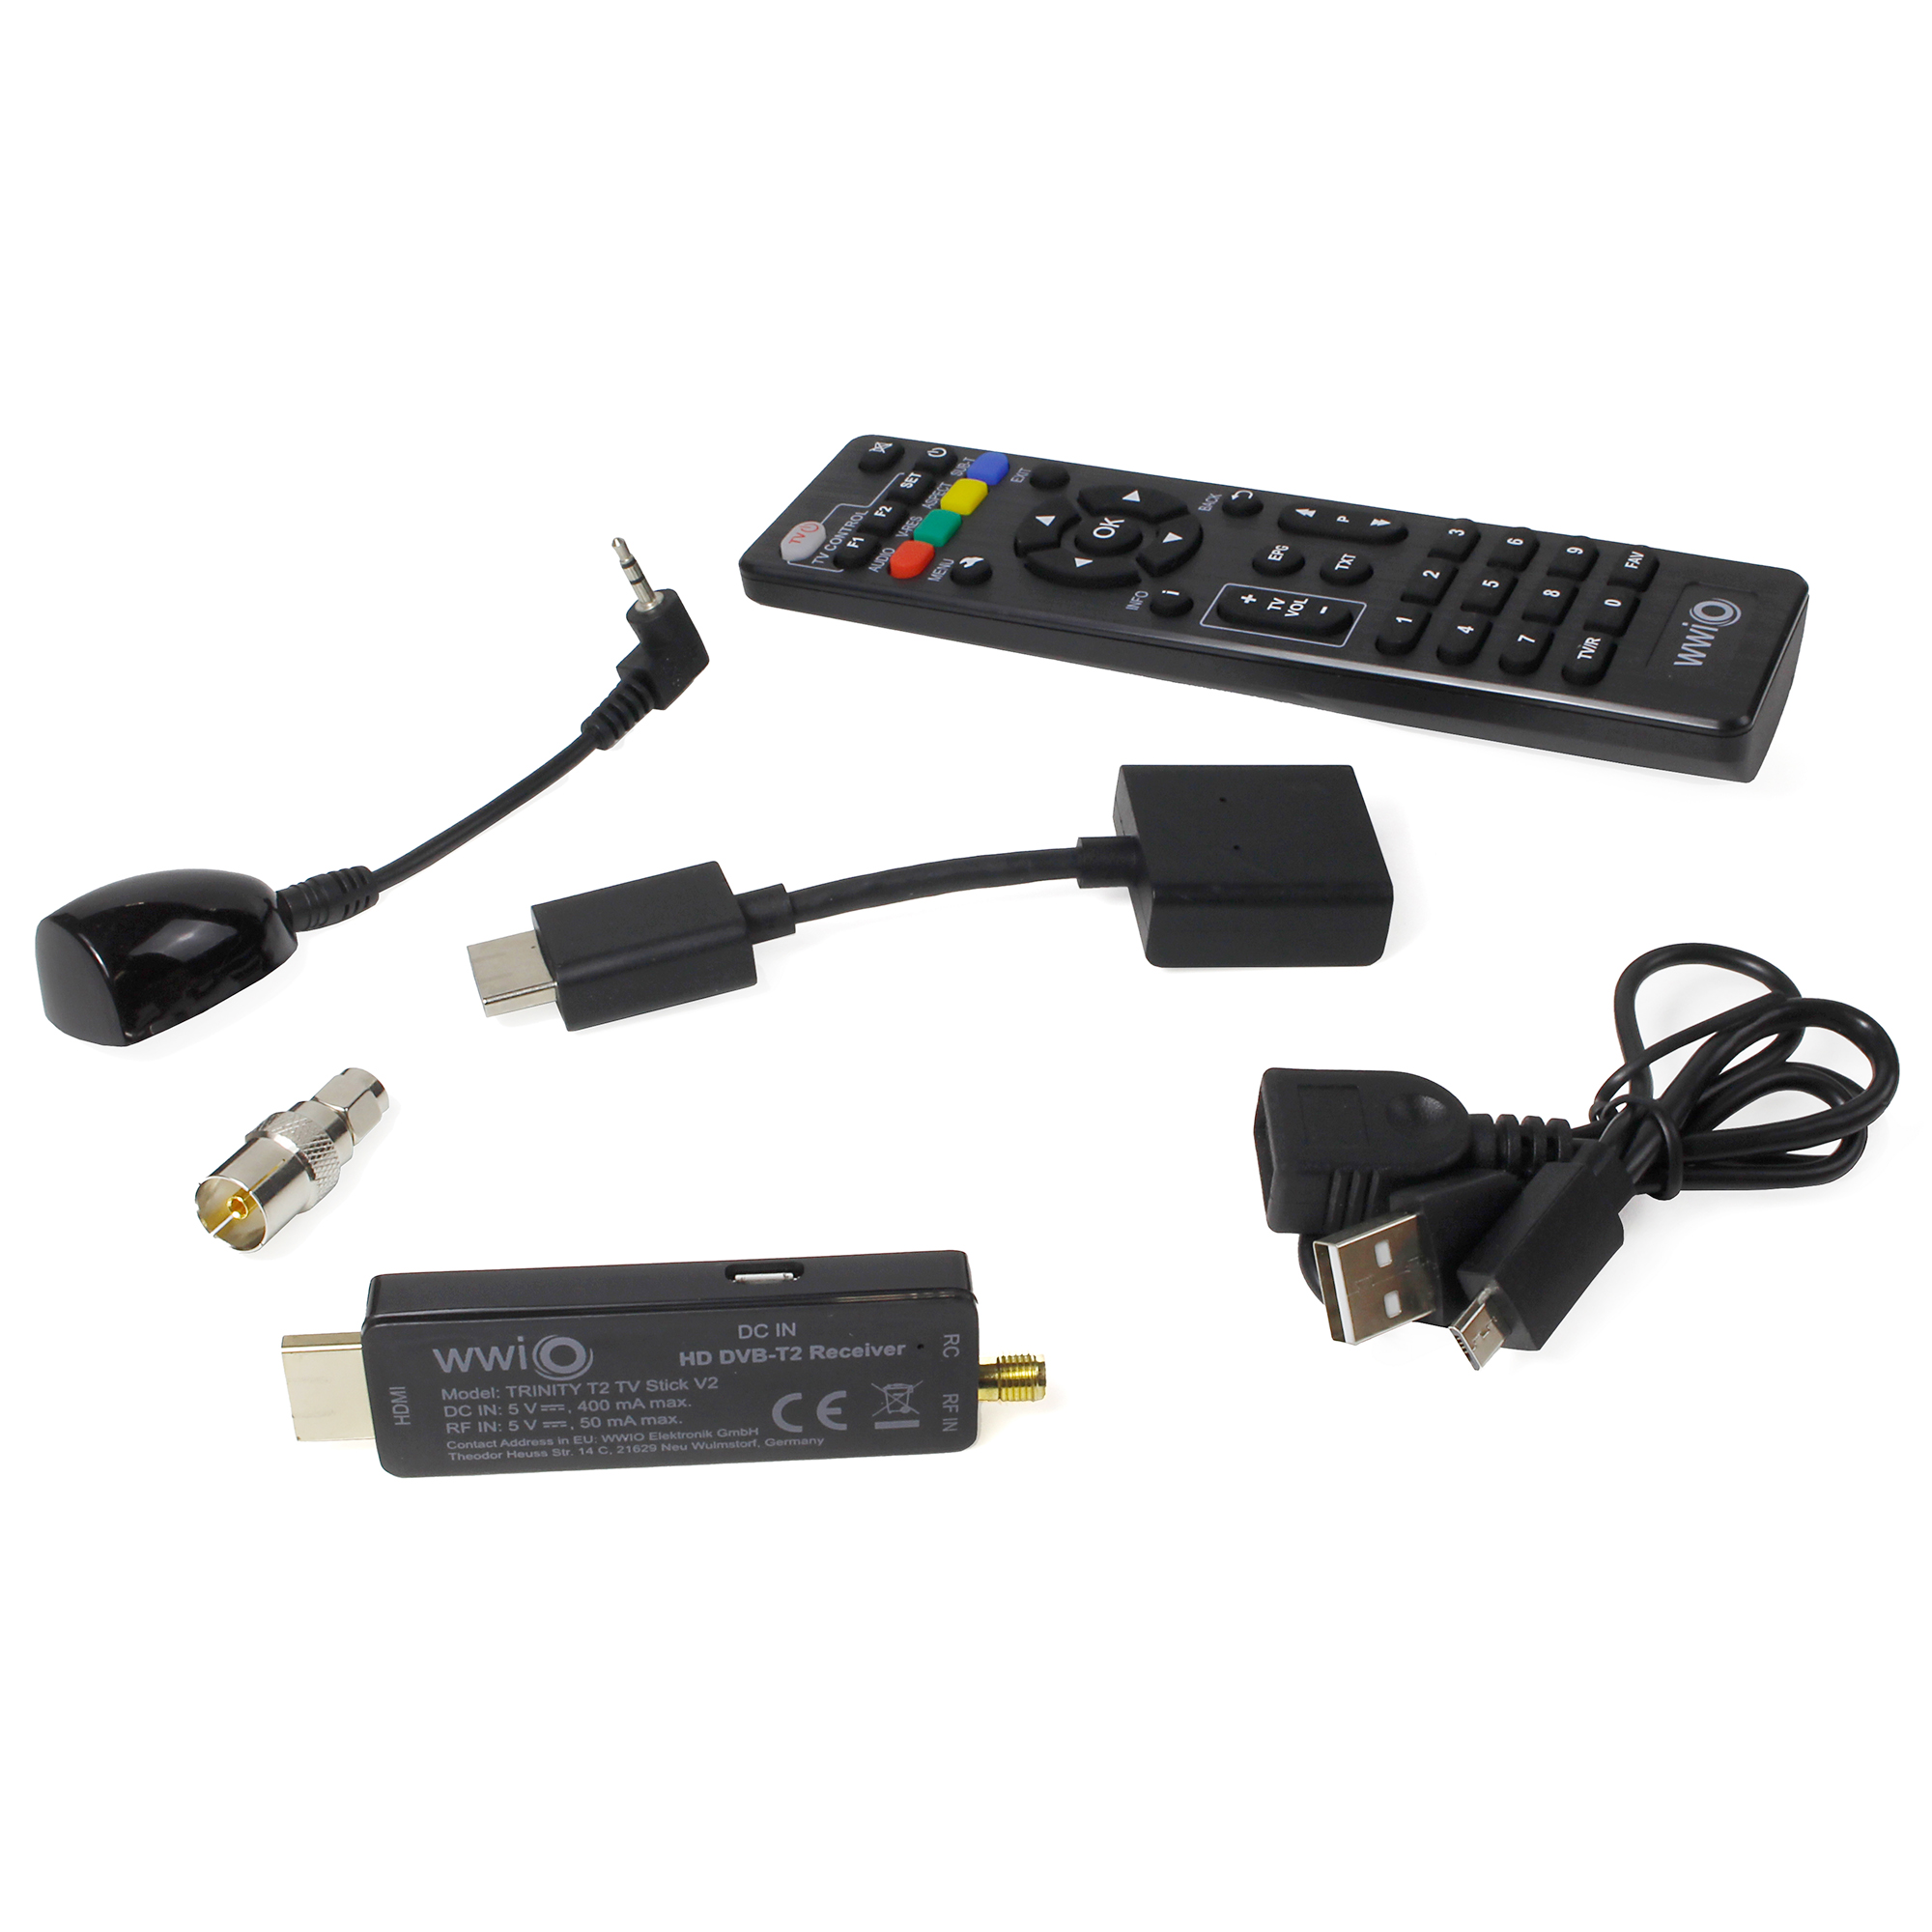 1 DVB-T2 WWIO HD TRINITY Receiver Stick FULL TV Stick 1920x1080 T2 Auflösung bis 2 Receiver WWIO Kompakter in DVB-T2 RCU